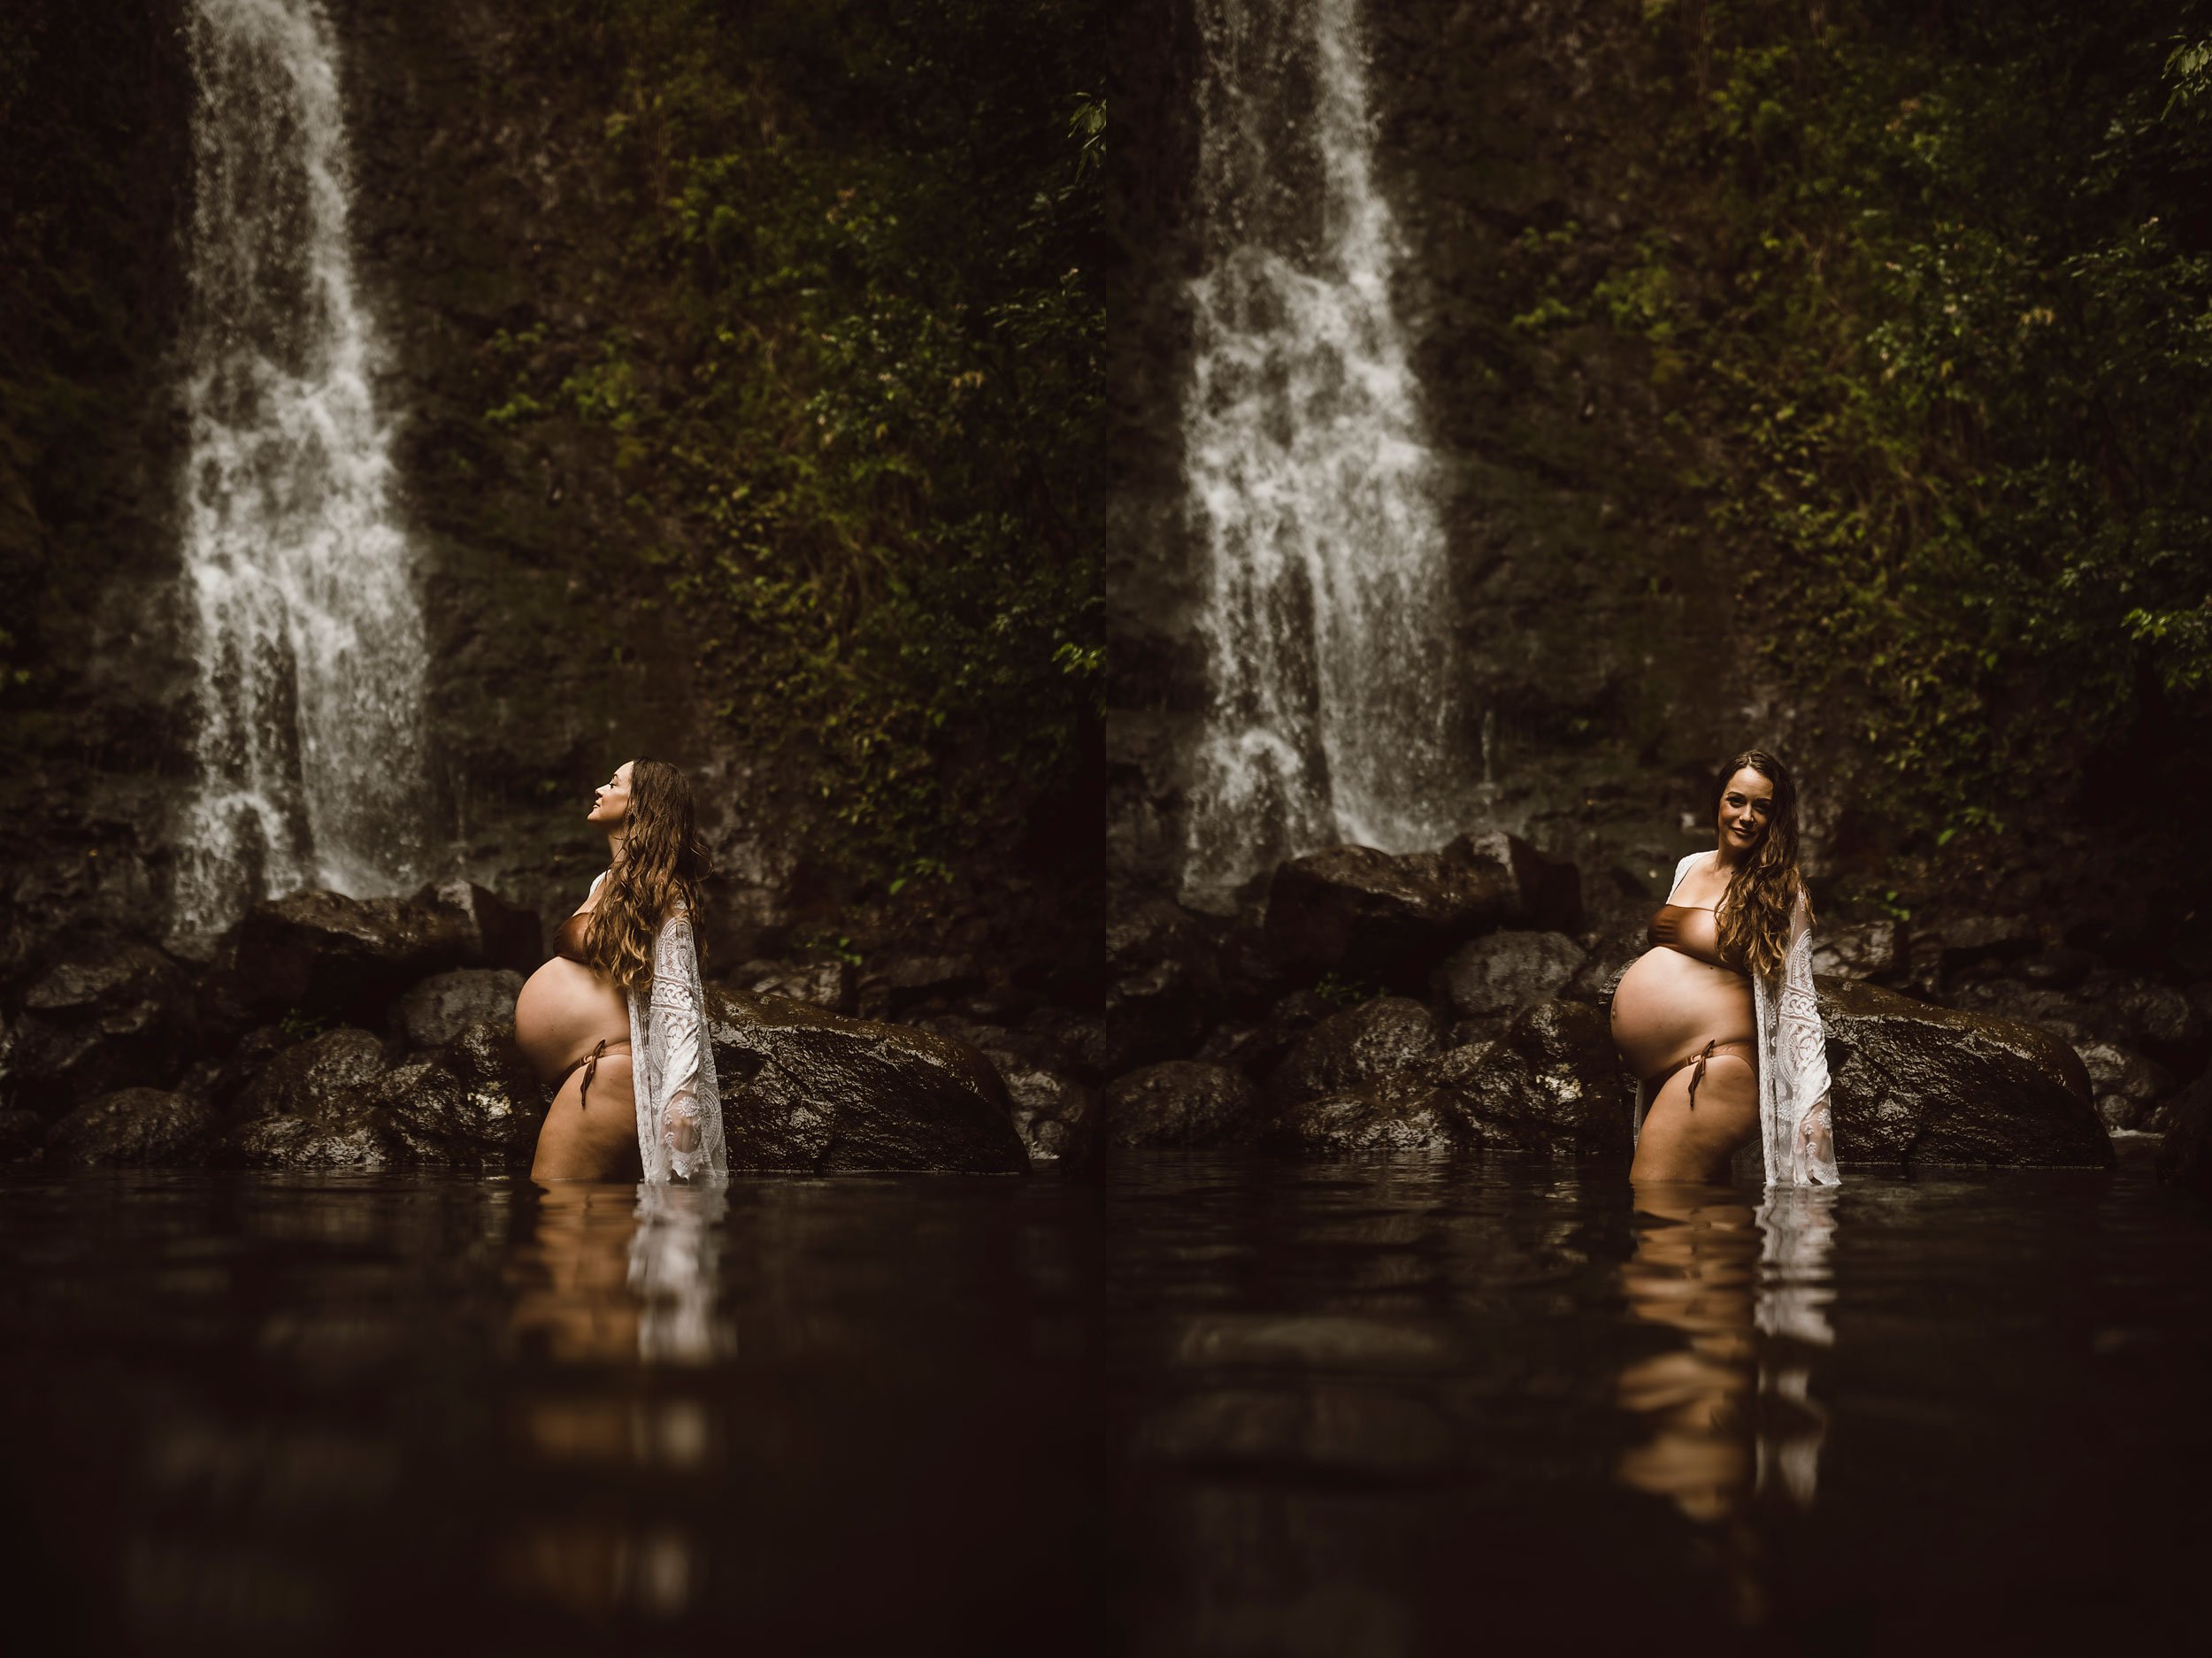 oahu-hawaii-waterfall-maternity-photos-lulumahu-06.jpg